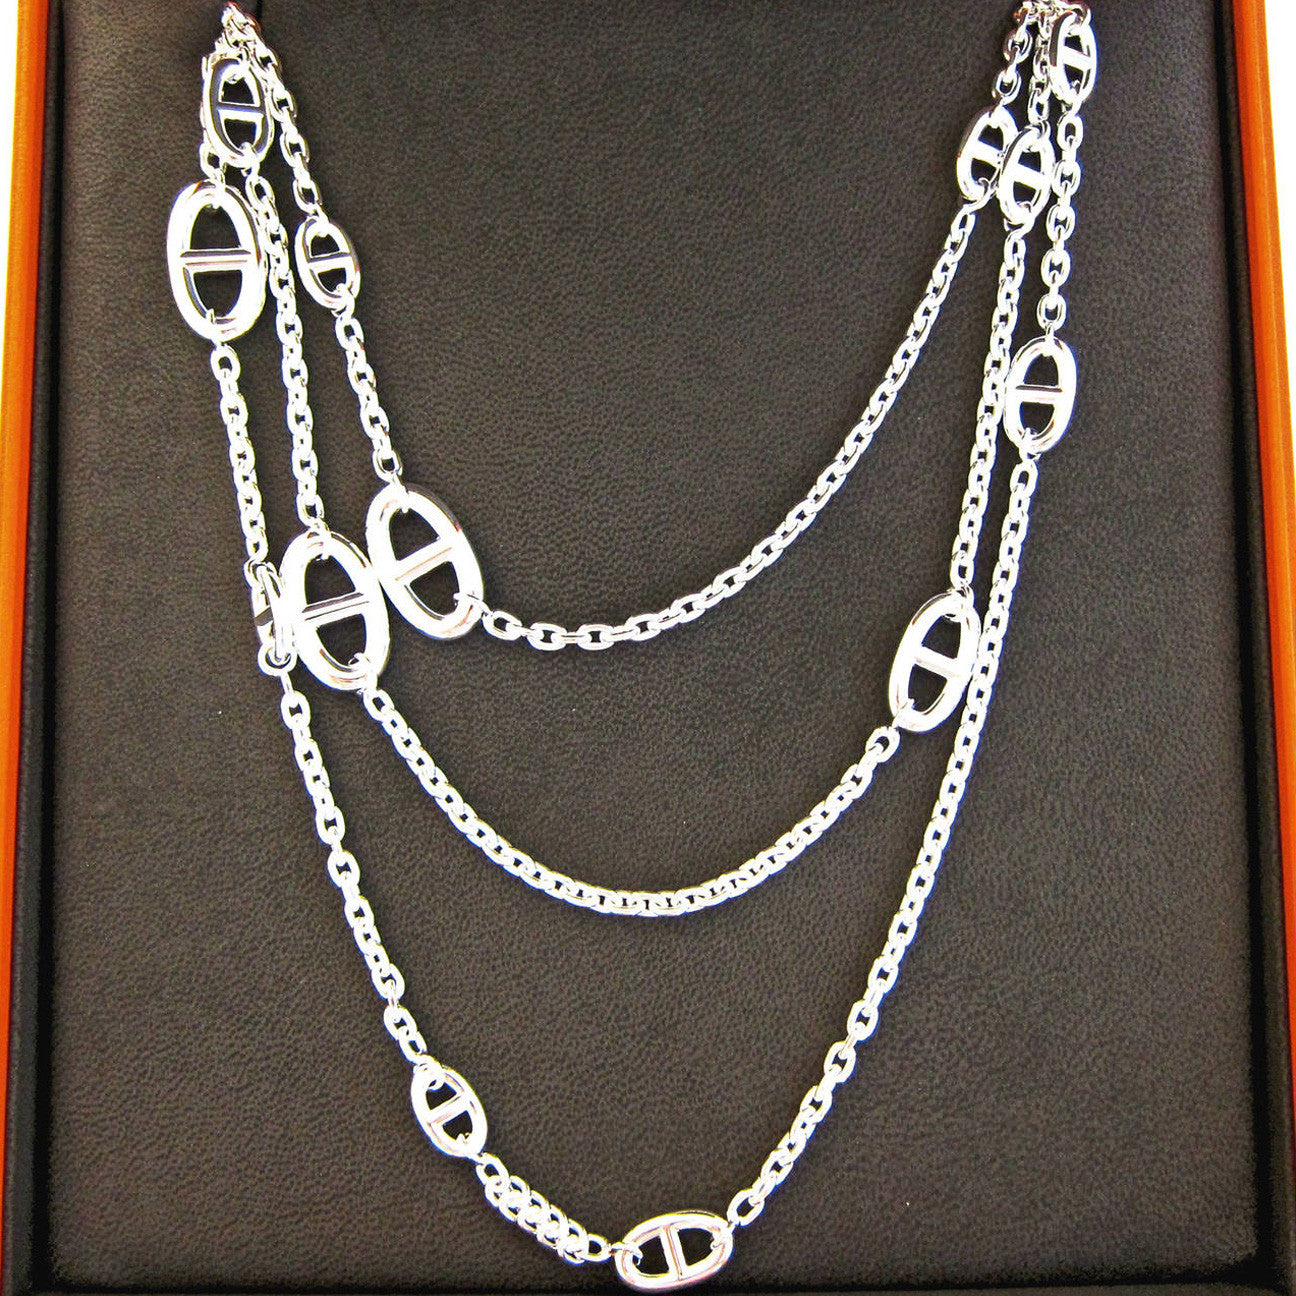 Hermes Farandole Silver necklace | Hermes jewelry necklace, Necklace, Silver  necklace